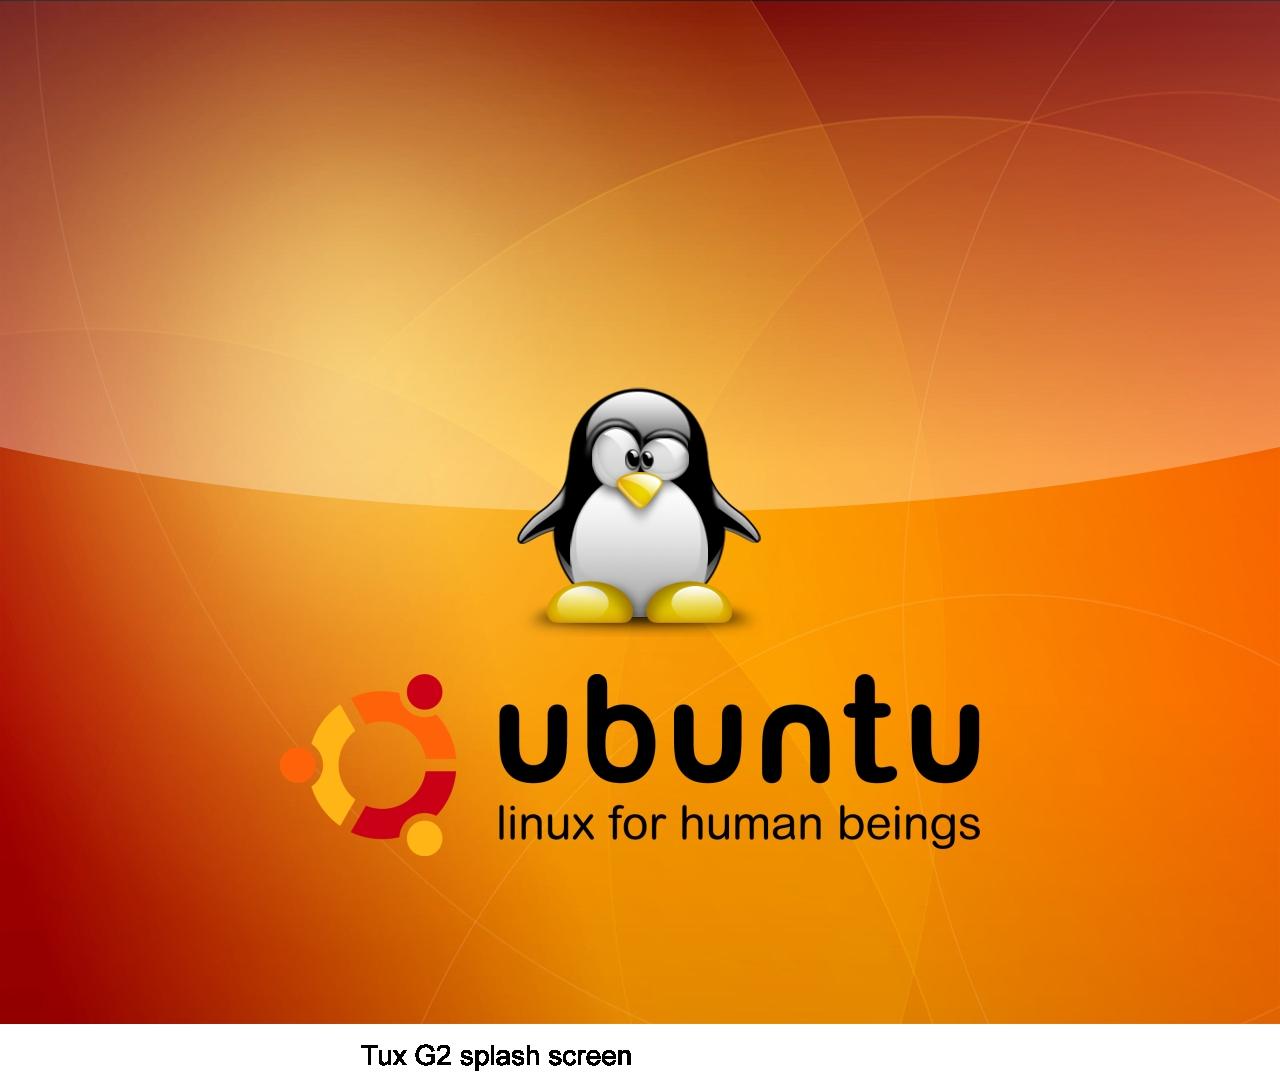 Ubuntu Hd Wallpapers Top Free Ubuntu Hd Backgrounds Wallpaperaccess